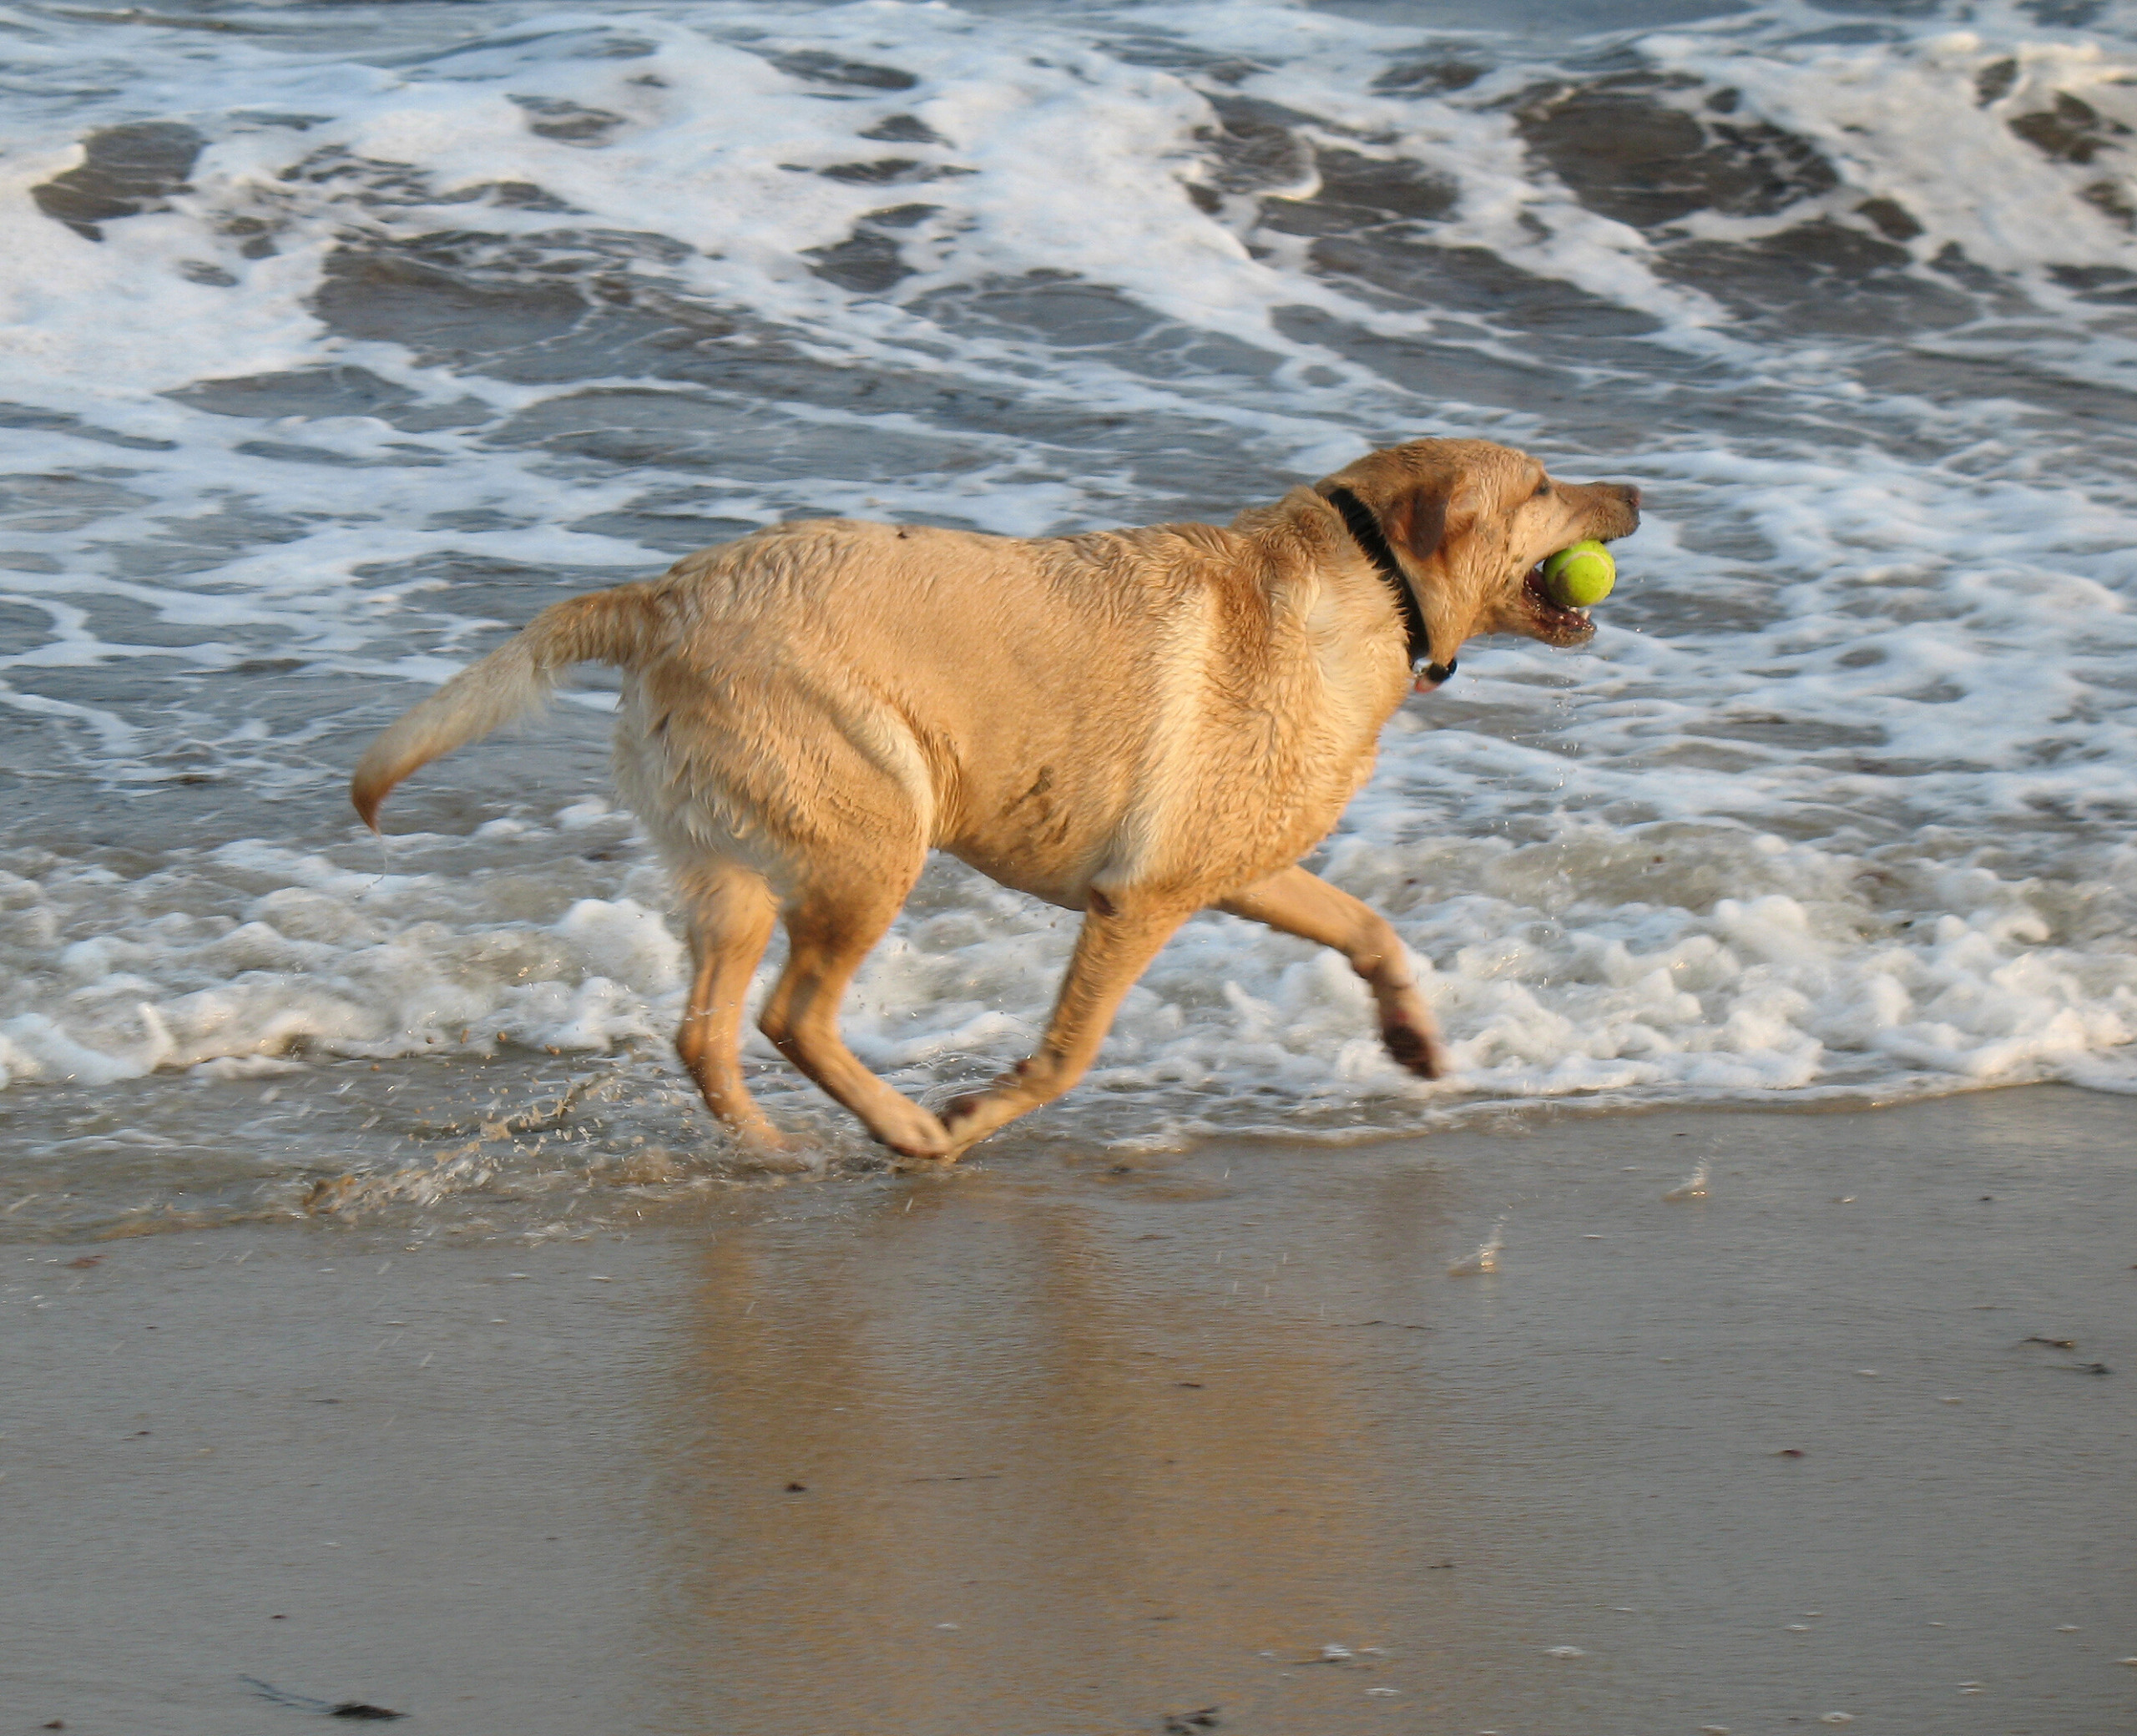 Saugeen Shores council balks at calls for more canine beach access